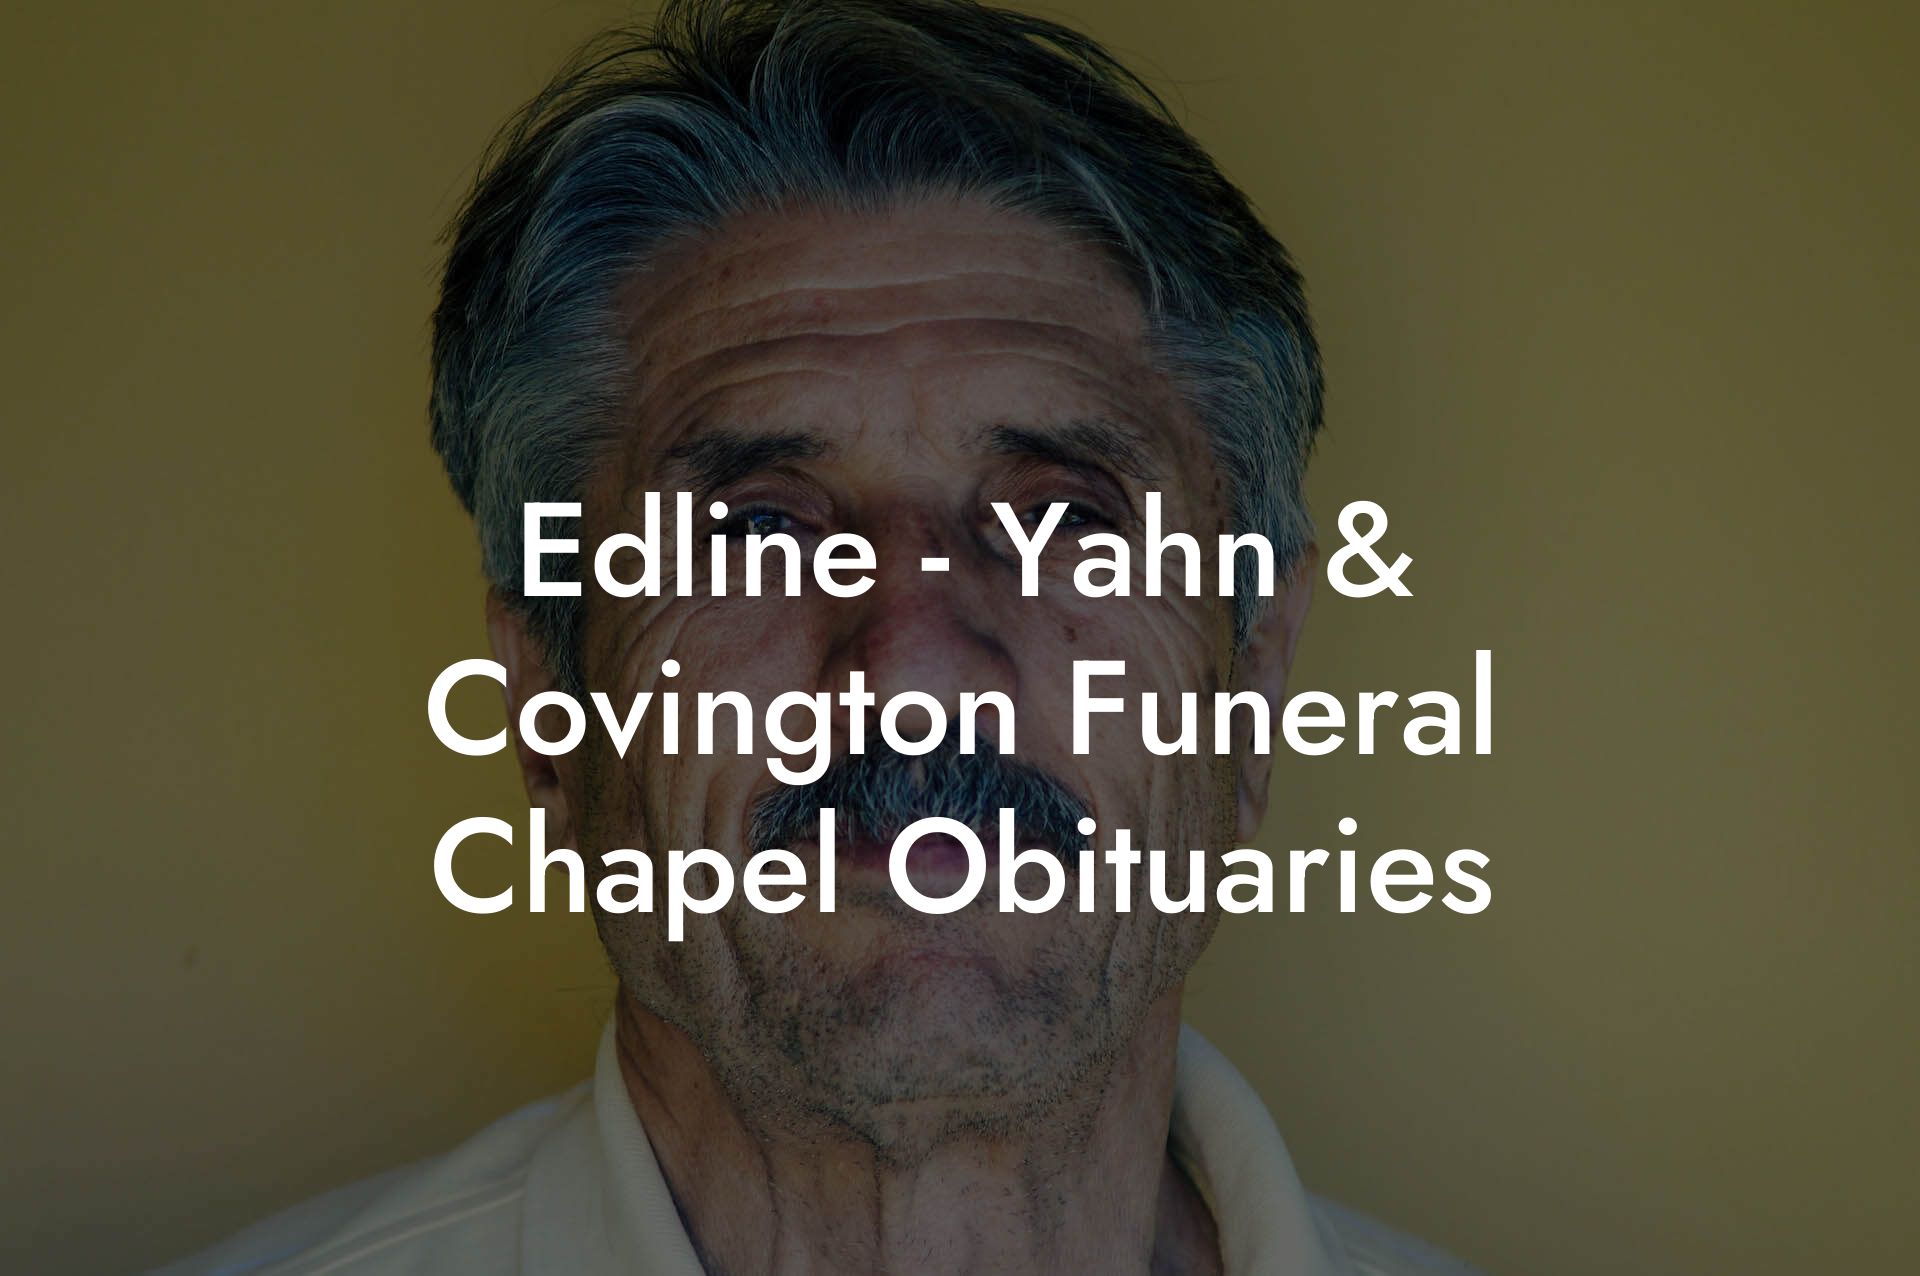 Edline - Yahn & Covington Funeral Chapel Obituaries